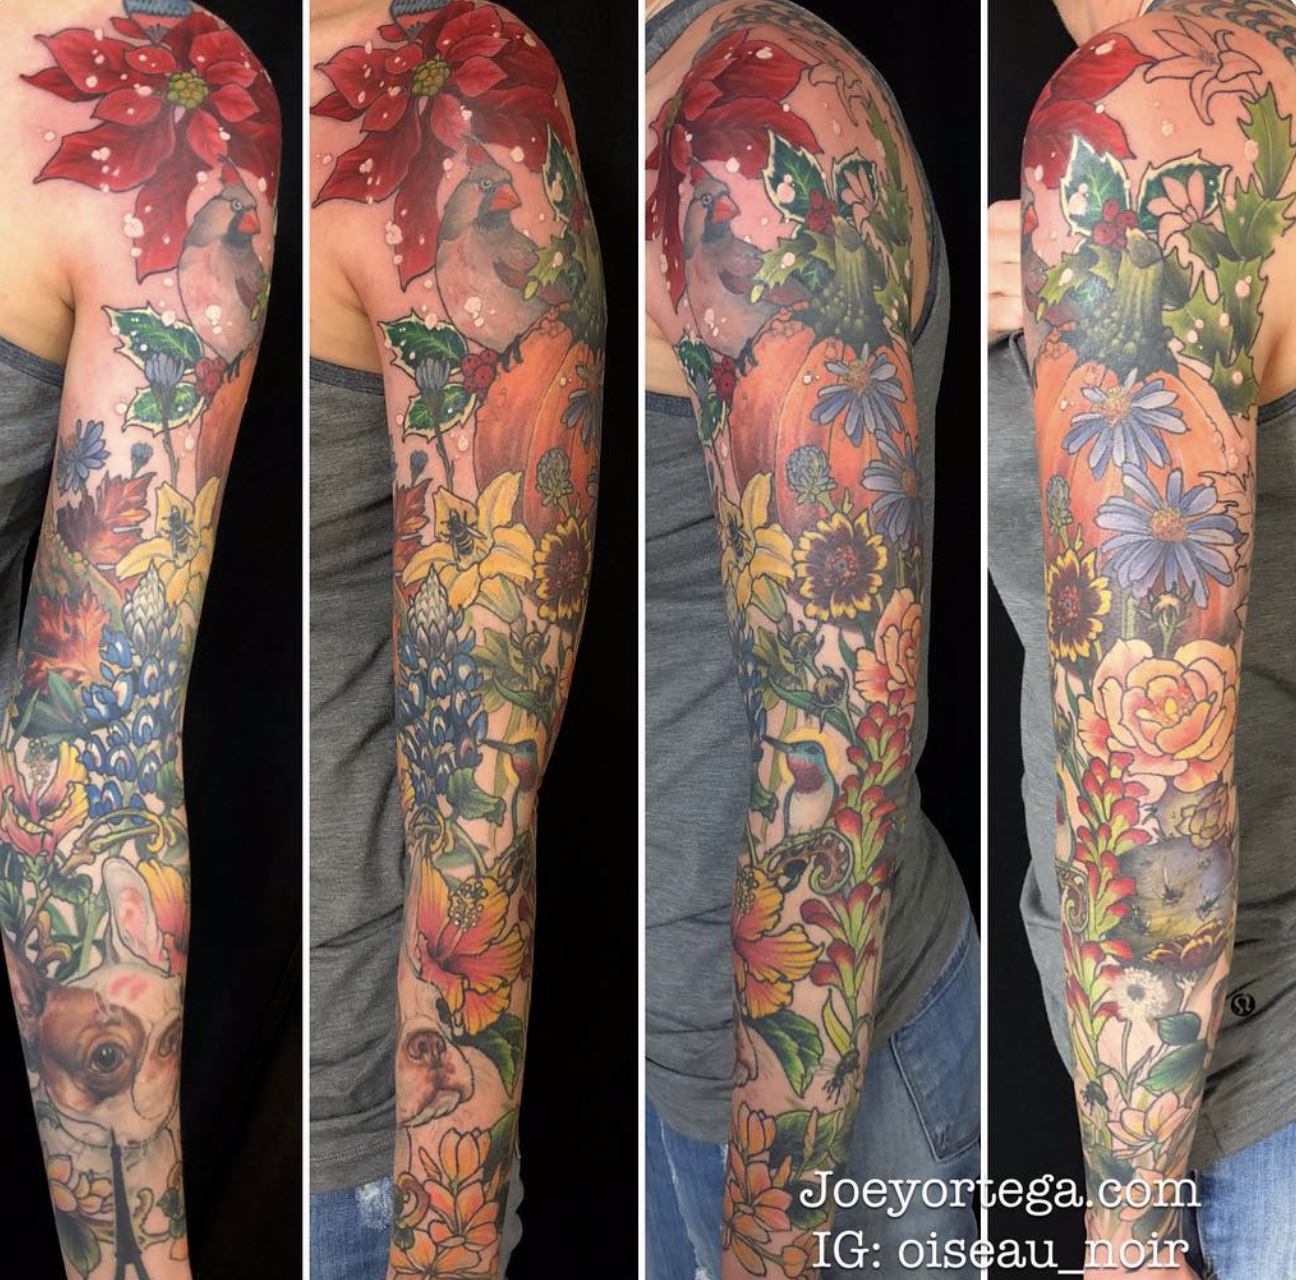 Ortega tattoo joey Tattoos: Pay